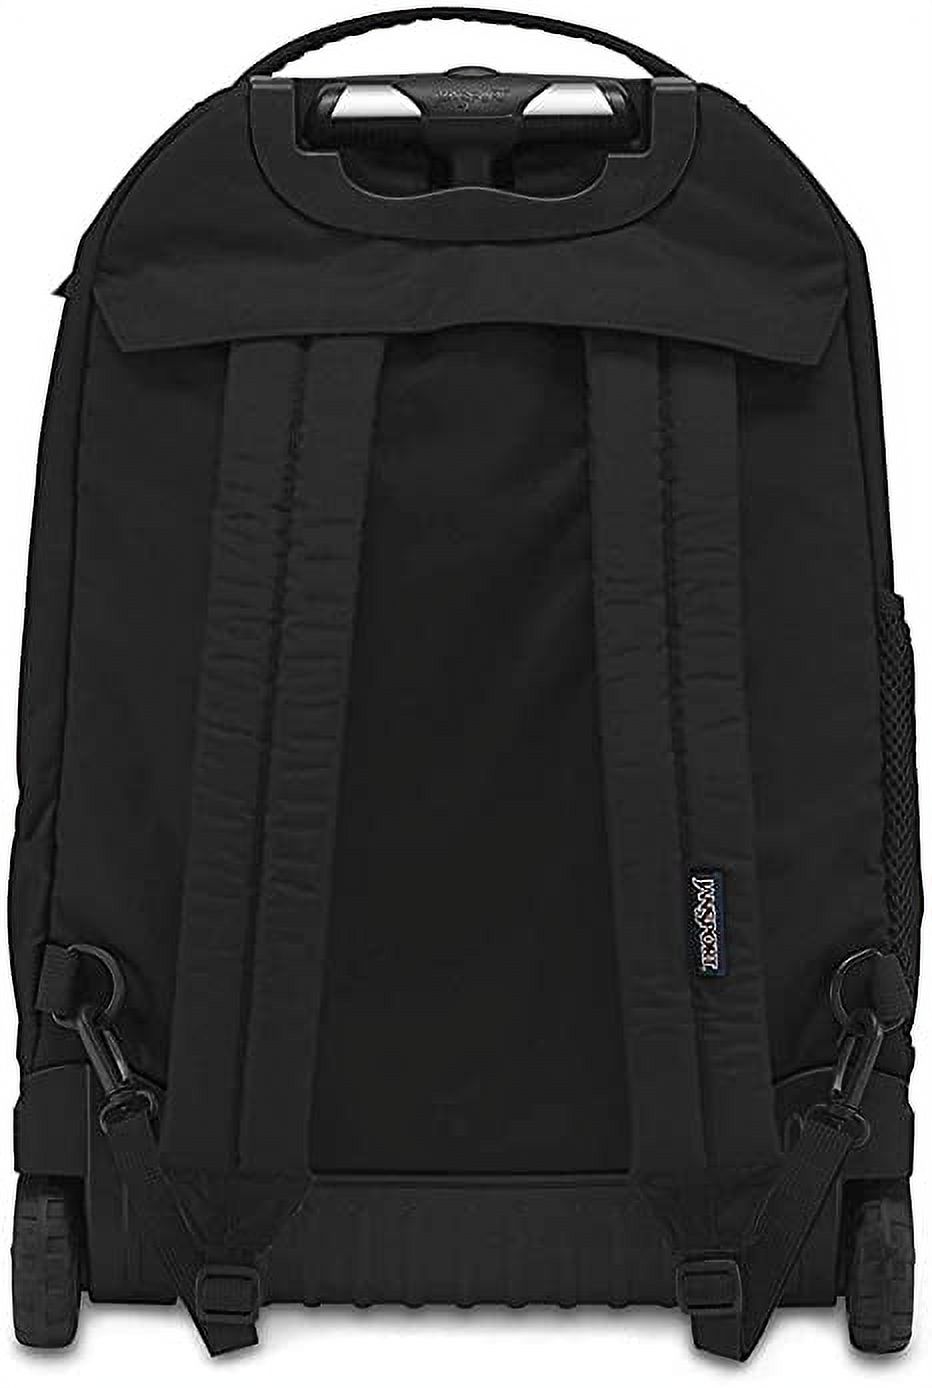 JanSport Driver 8 Rolling Backpack - Wheeled Travel Bag with 15-Inch Laptop Sleeve (Black) - image 2 of 4